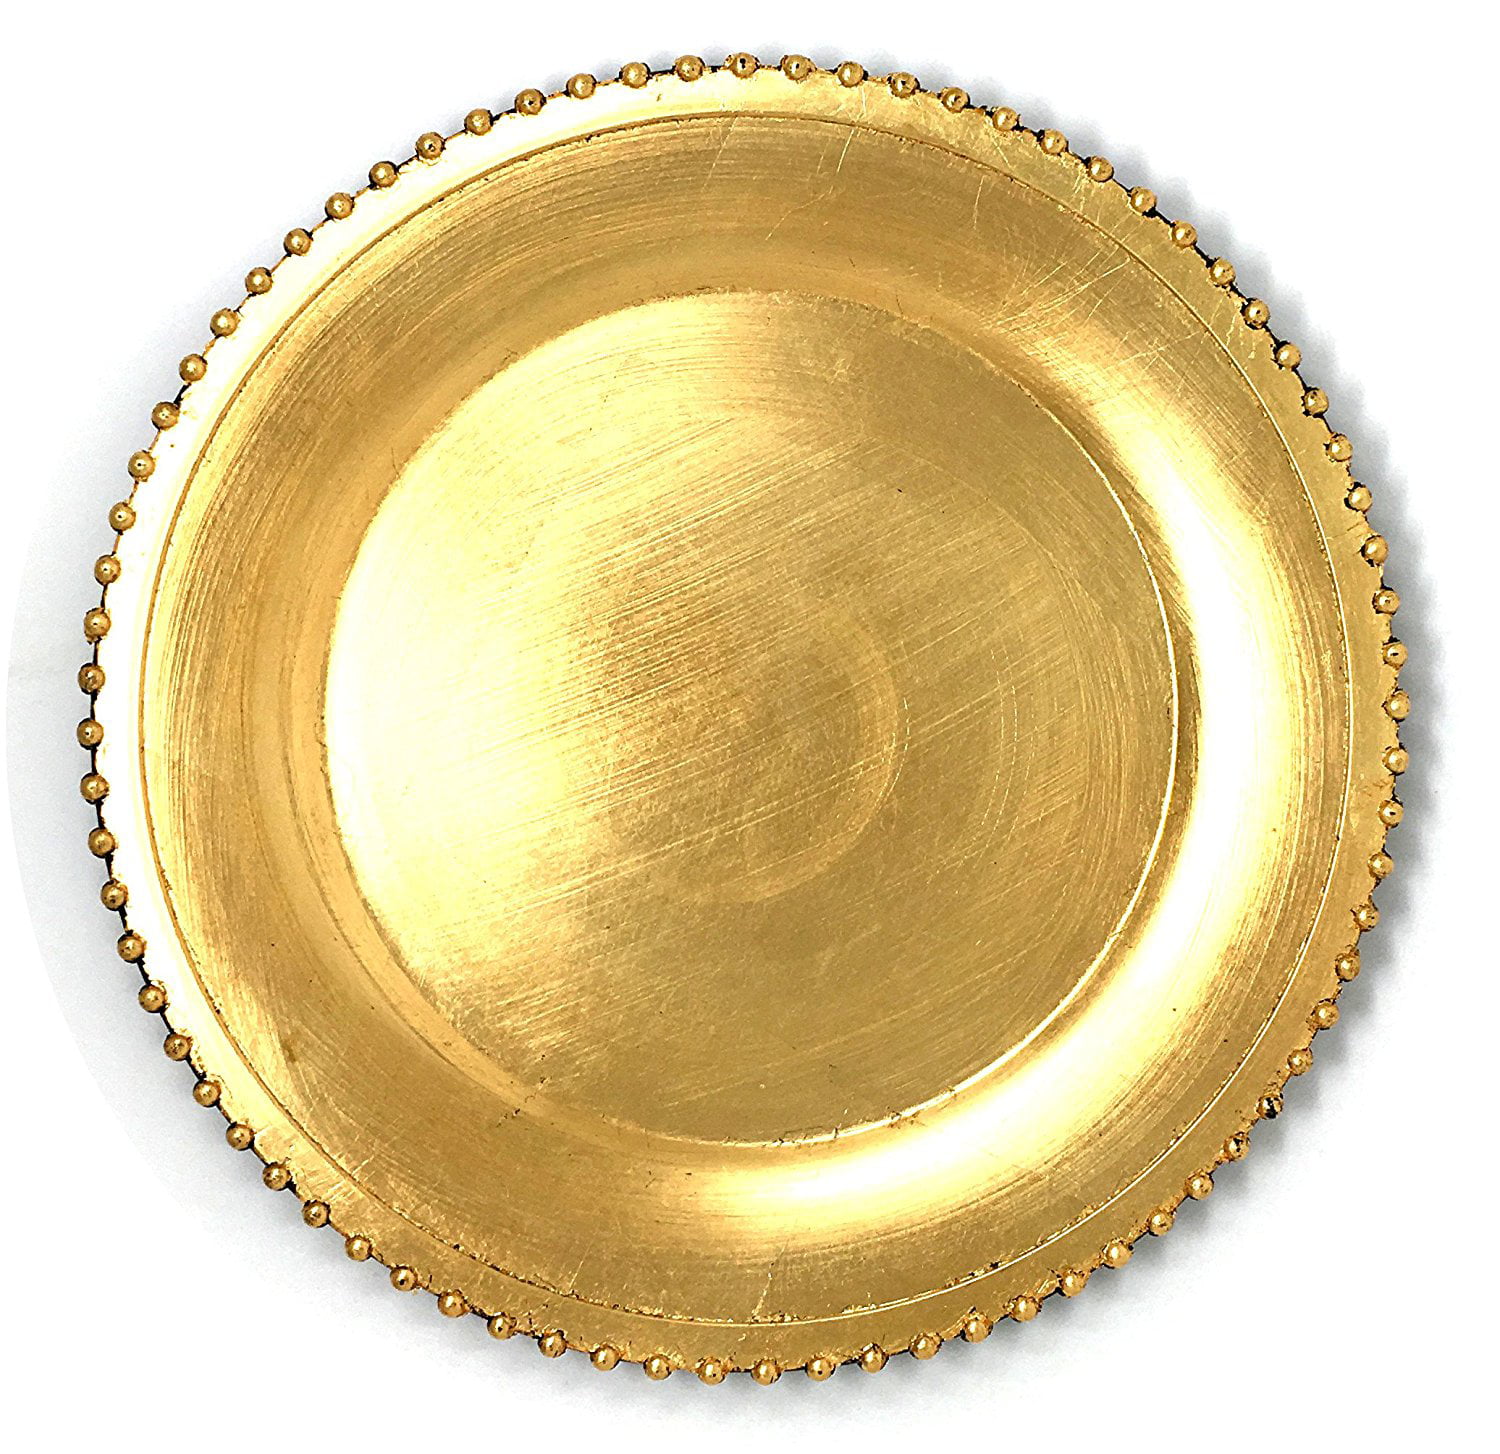 Gold rounds. Gold Plate. Печать золото латунь. Gold Plate jinglebolt. Античное золото акрил.